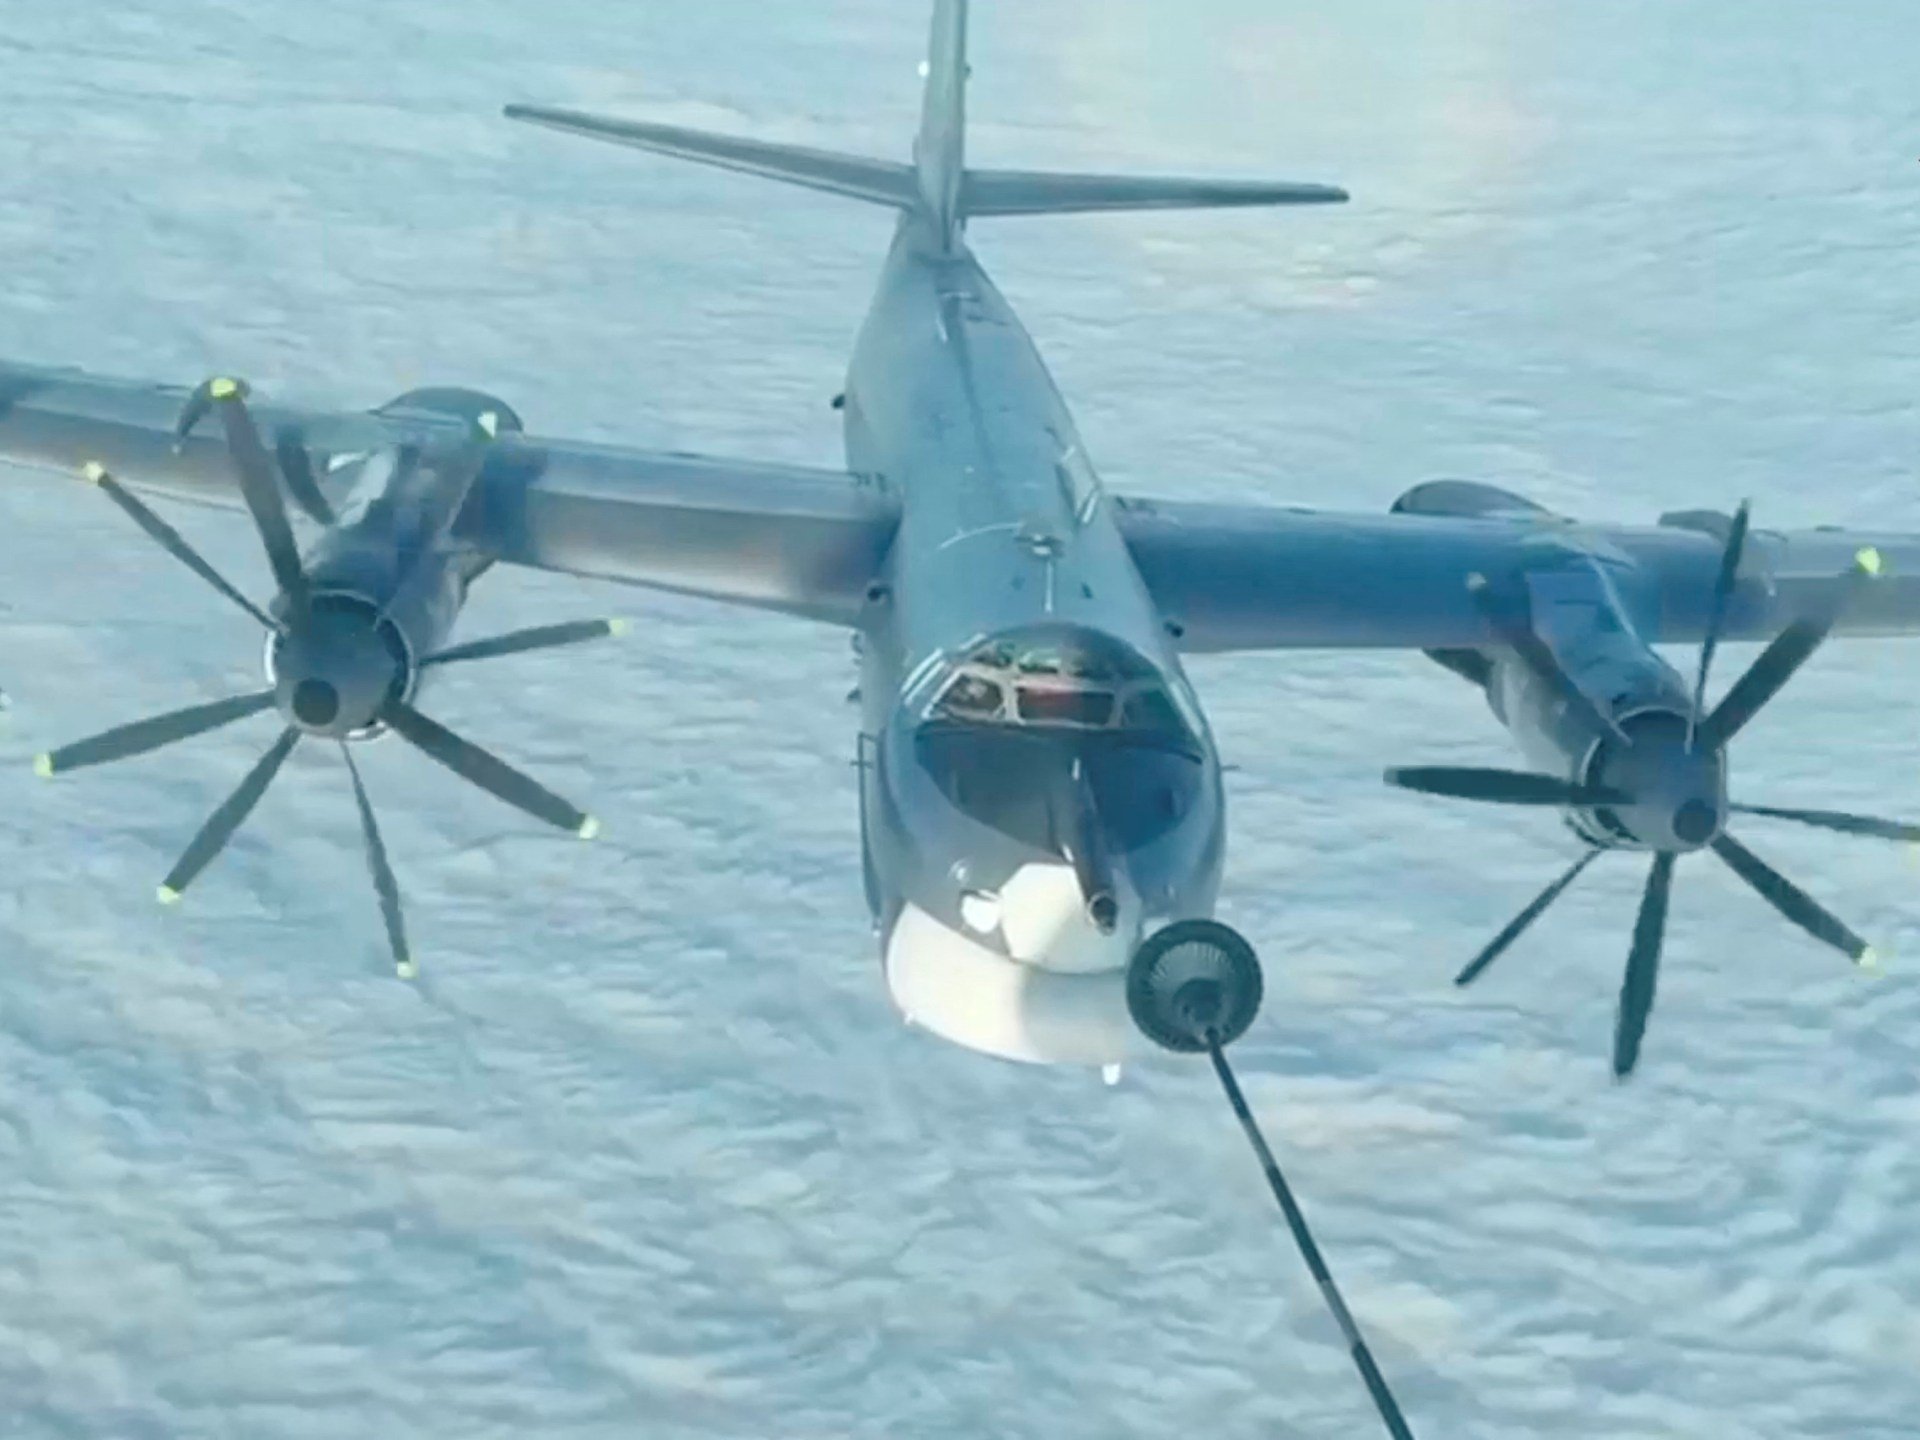 US intercepts Russian, Chinese bombers near Alaska: What we know